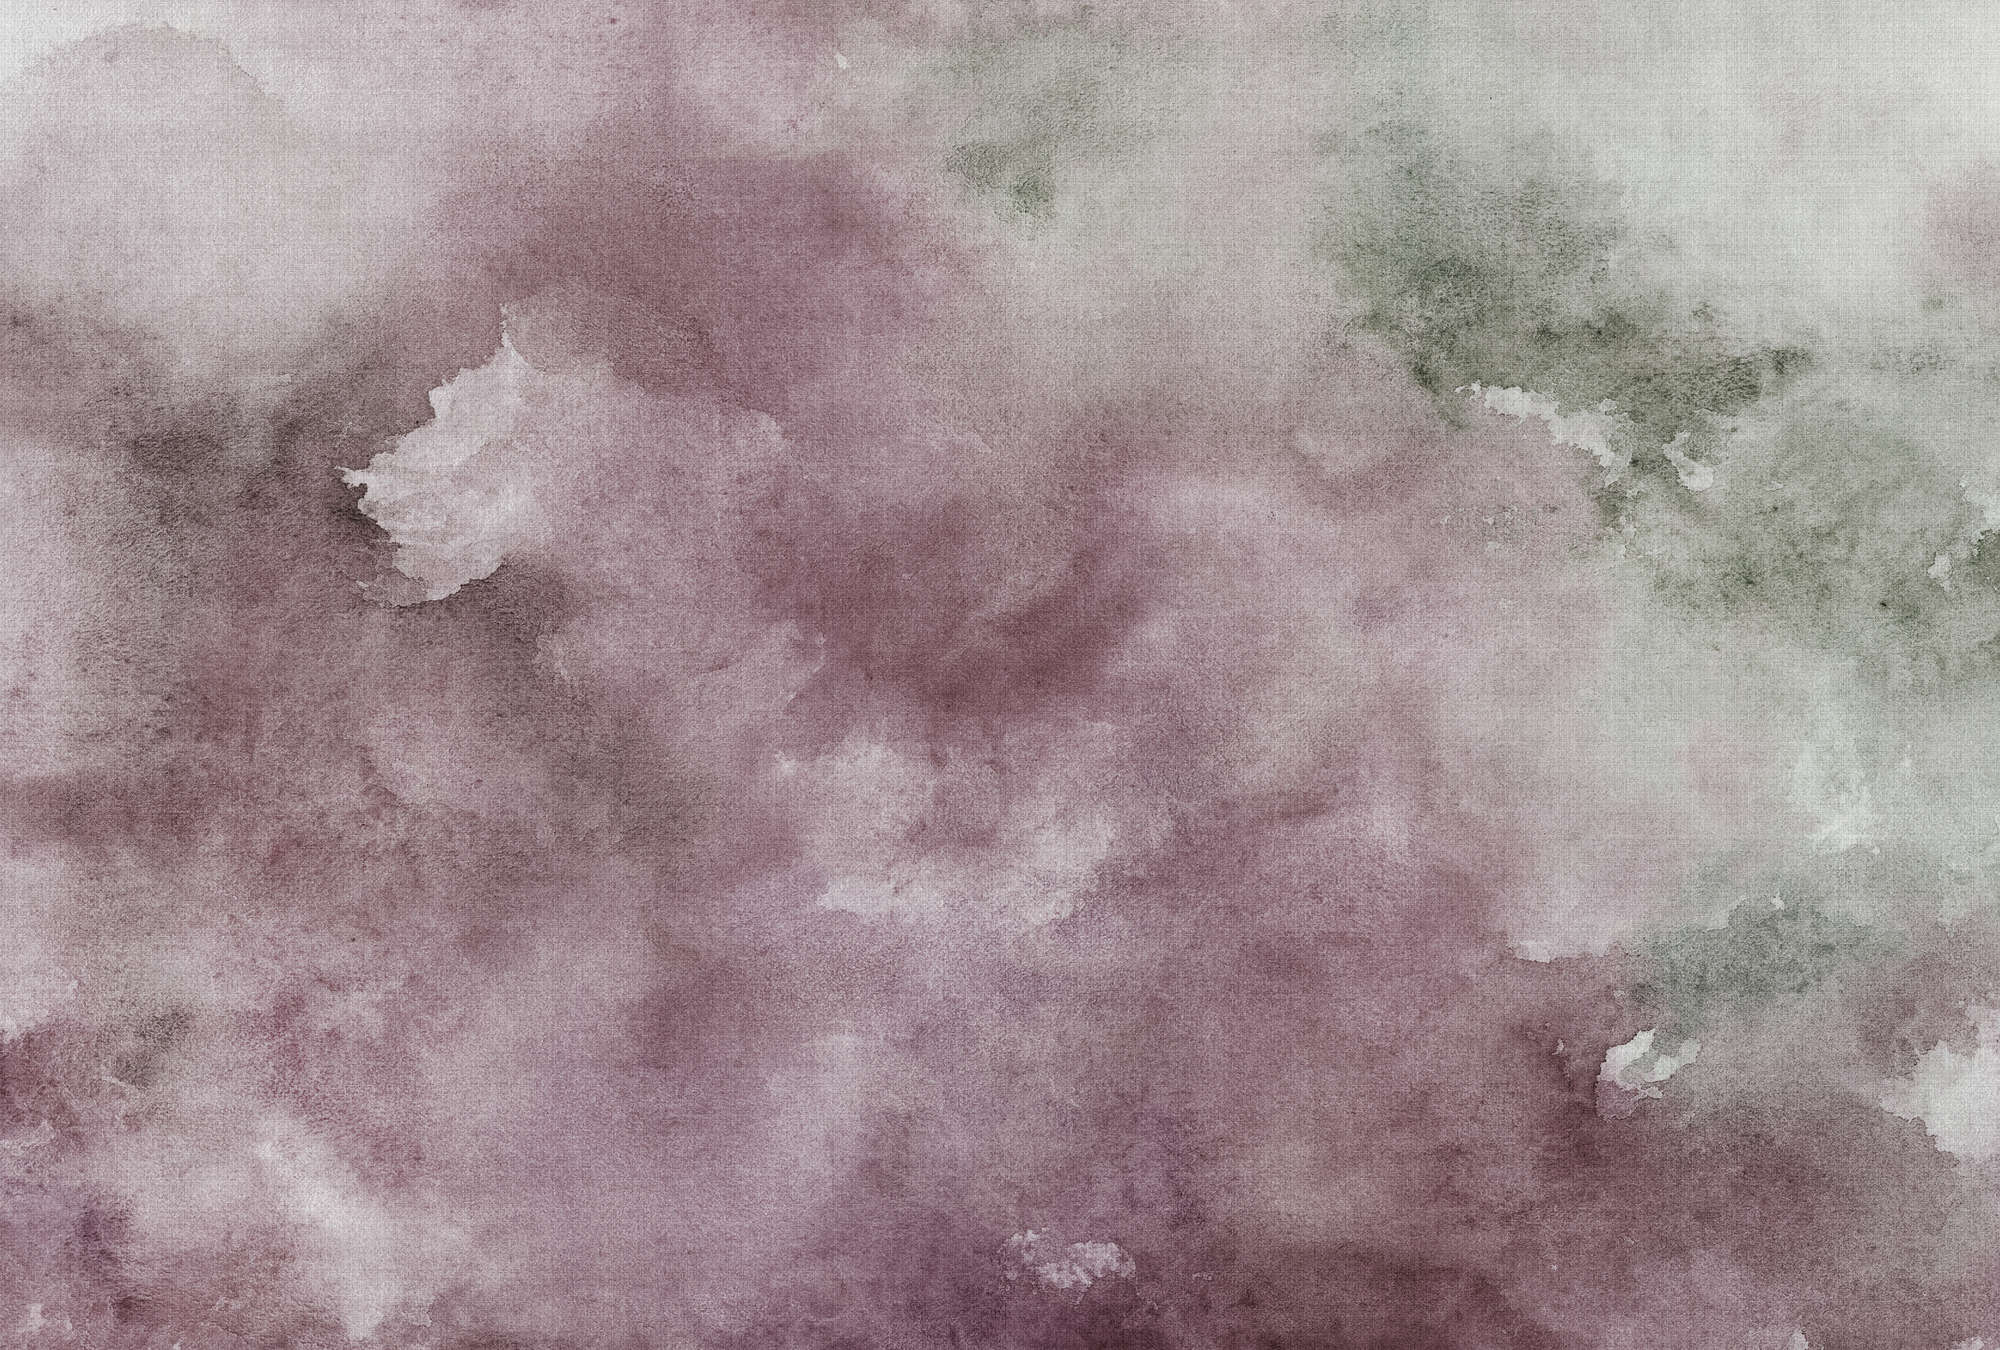             Watercolours 2 - Wallpaper Watercolours Motif Violet- Nature Linen Texture - Beige, Brown | Premium Smooth Nonwoven
        